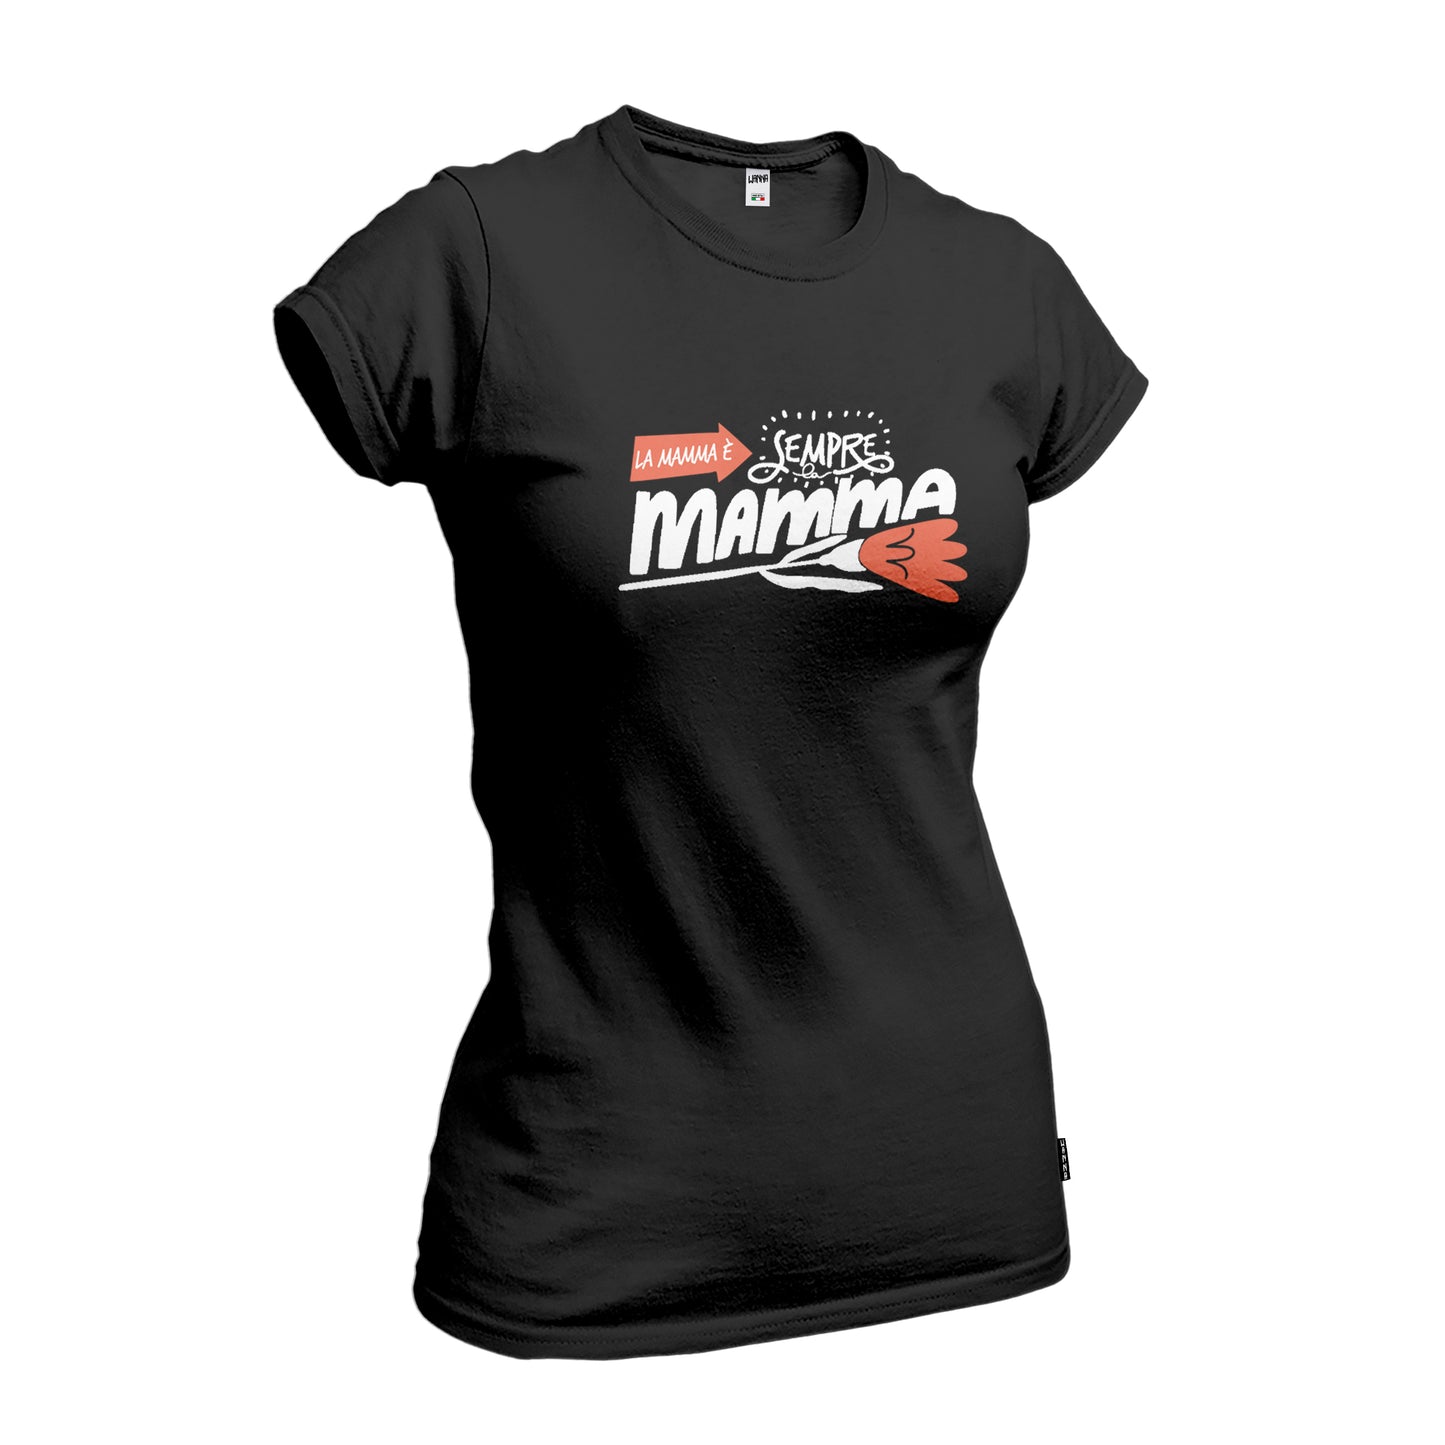 Mamma - T-Shirt